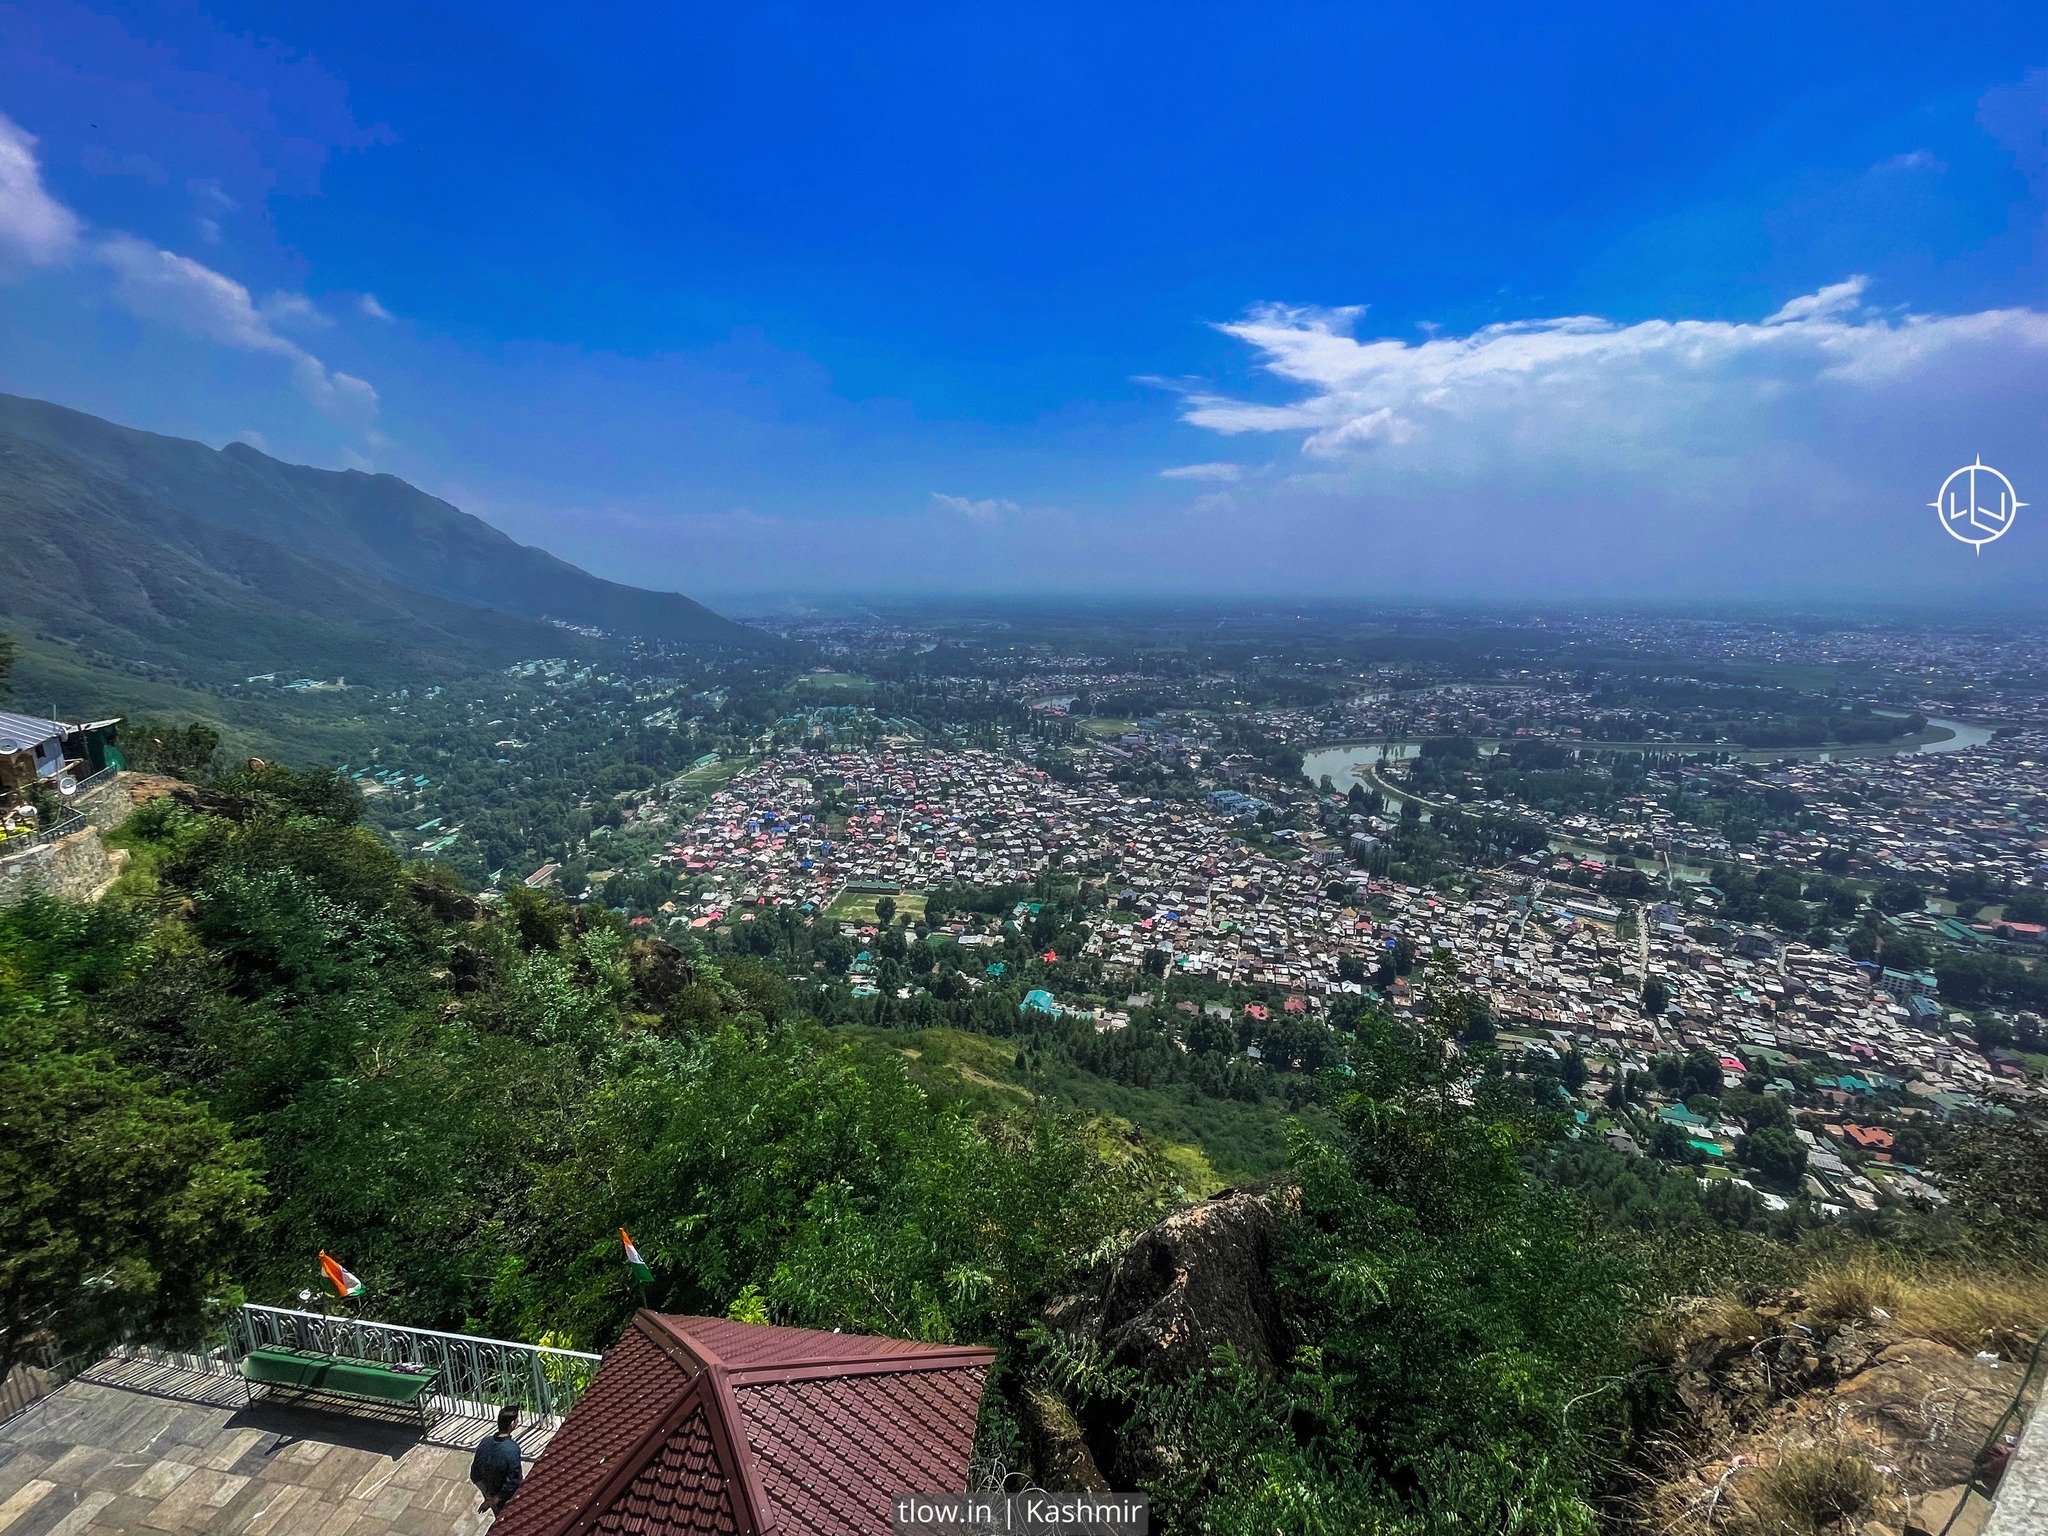 Kashmir Valley view